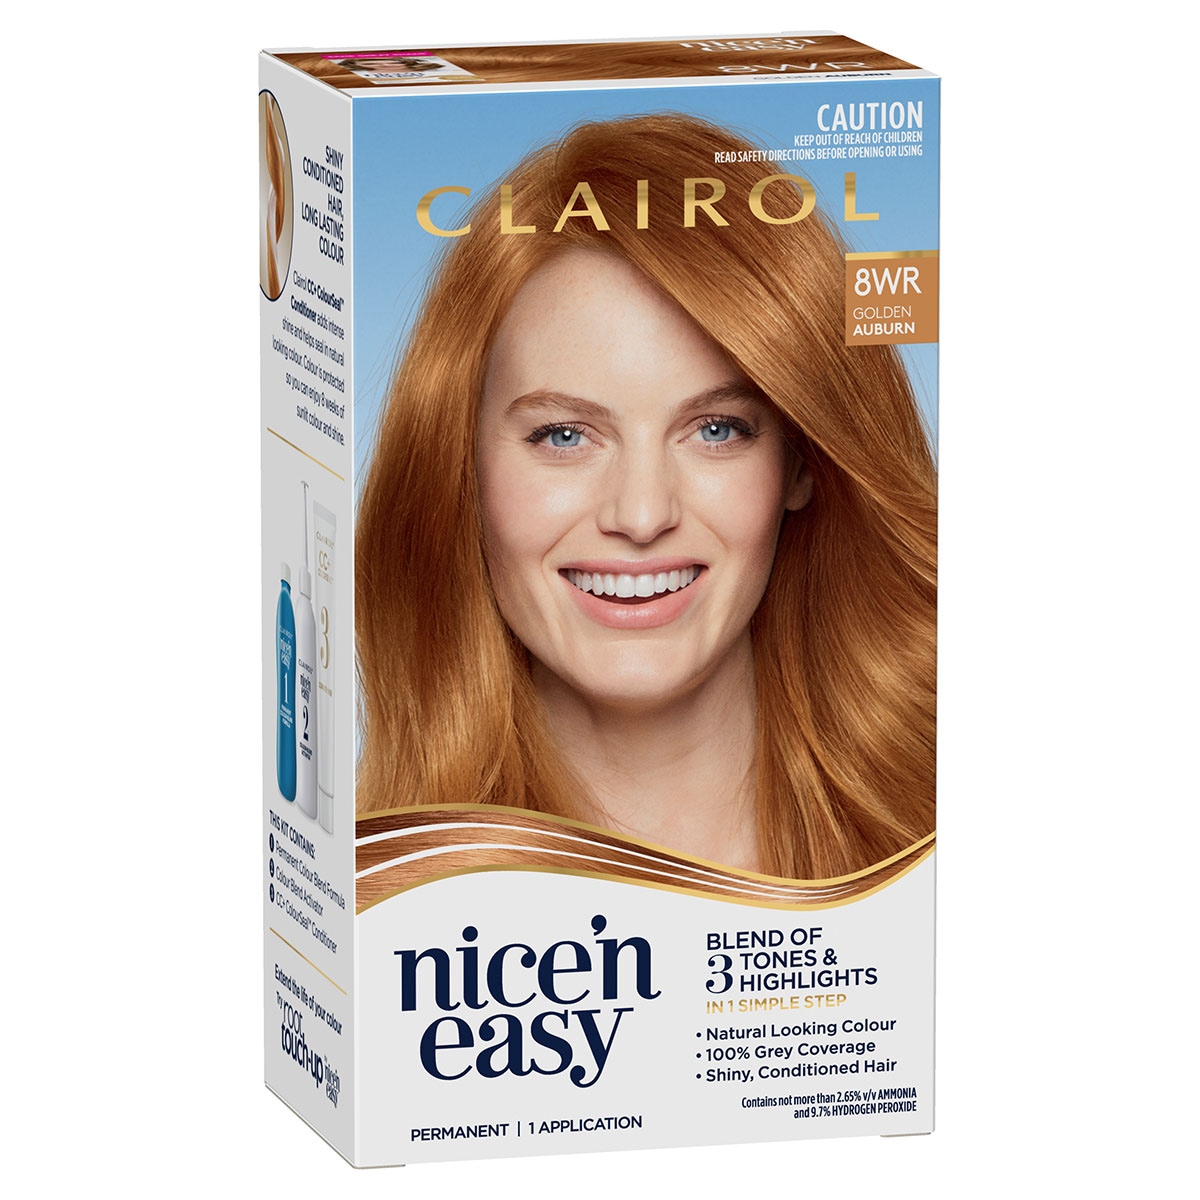 Clairol Nice N Easy 8WR Natural Golden Auburn Hair Colour